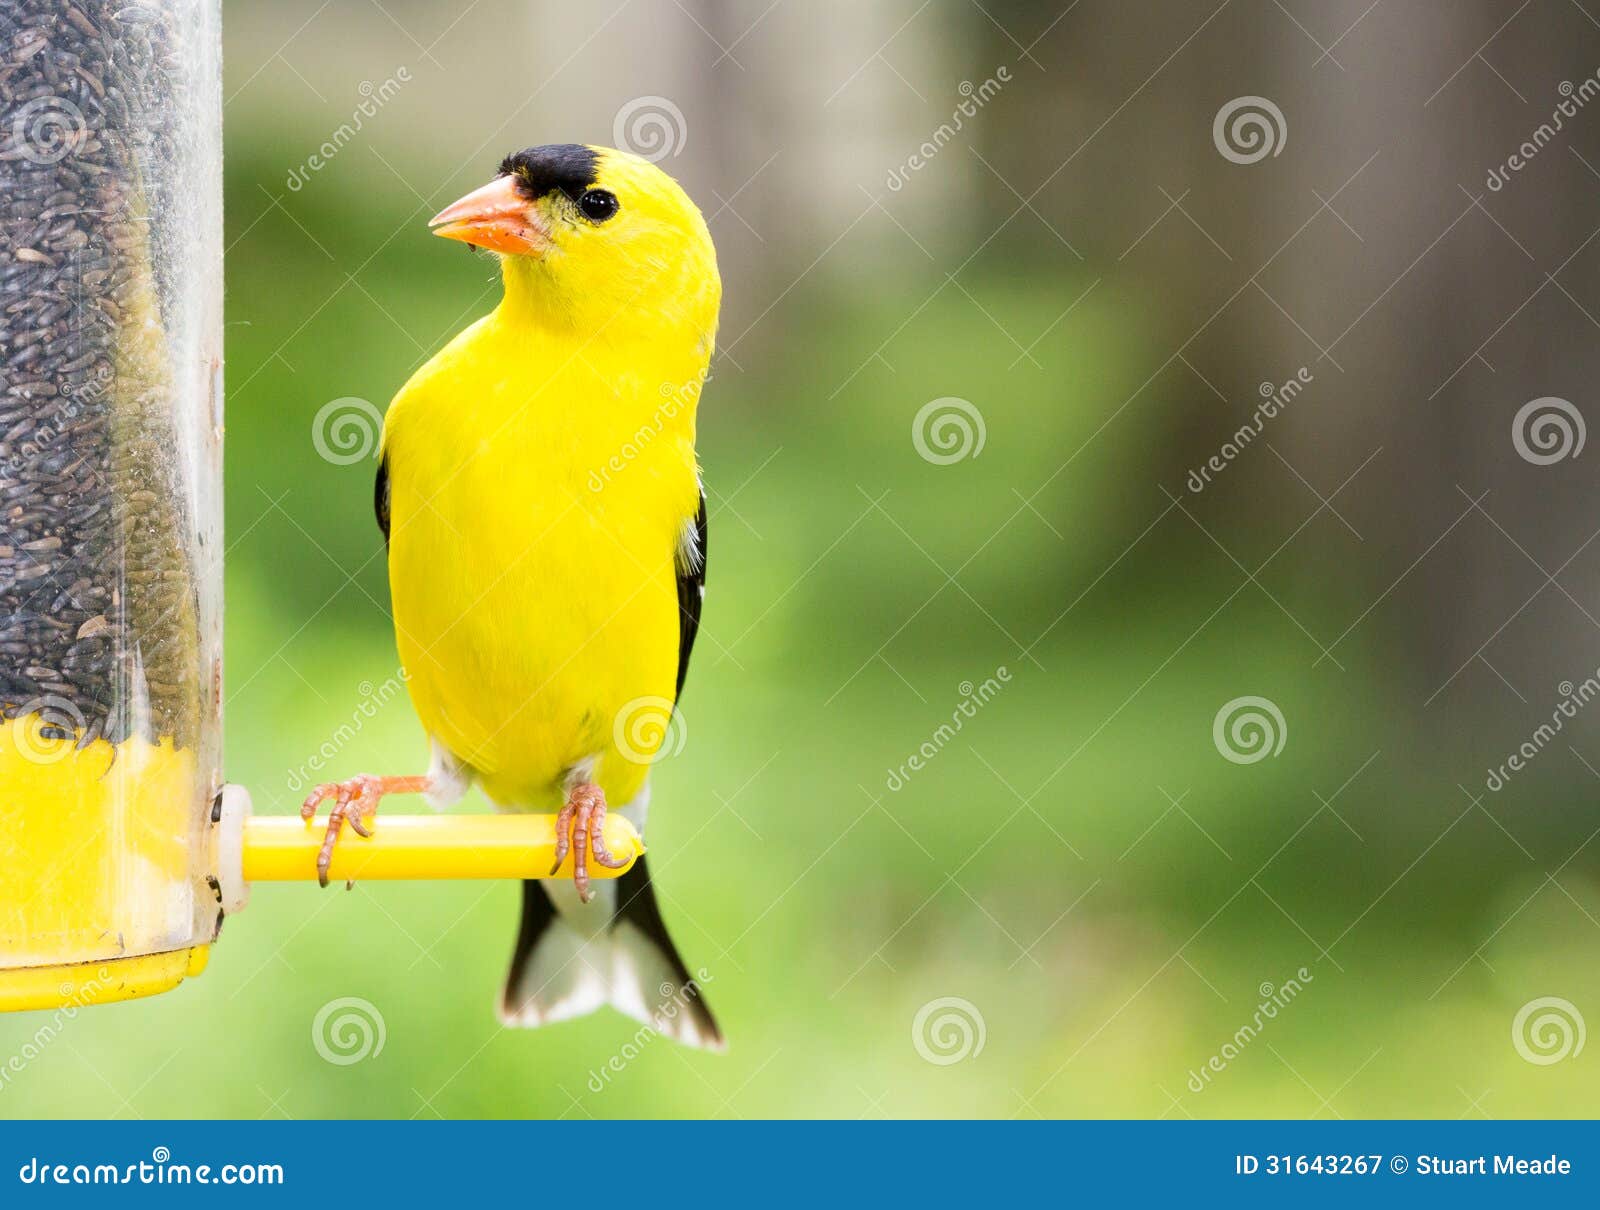 Yellow Finch Bird at Feeder